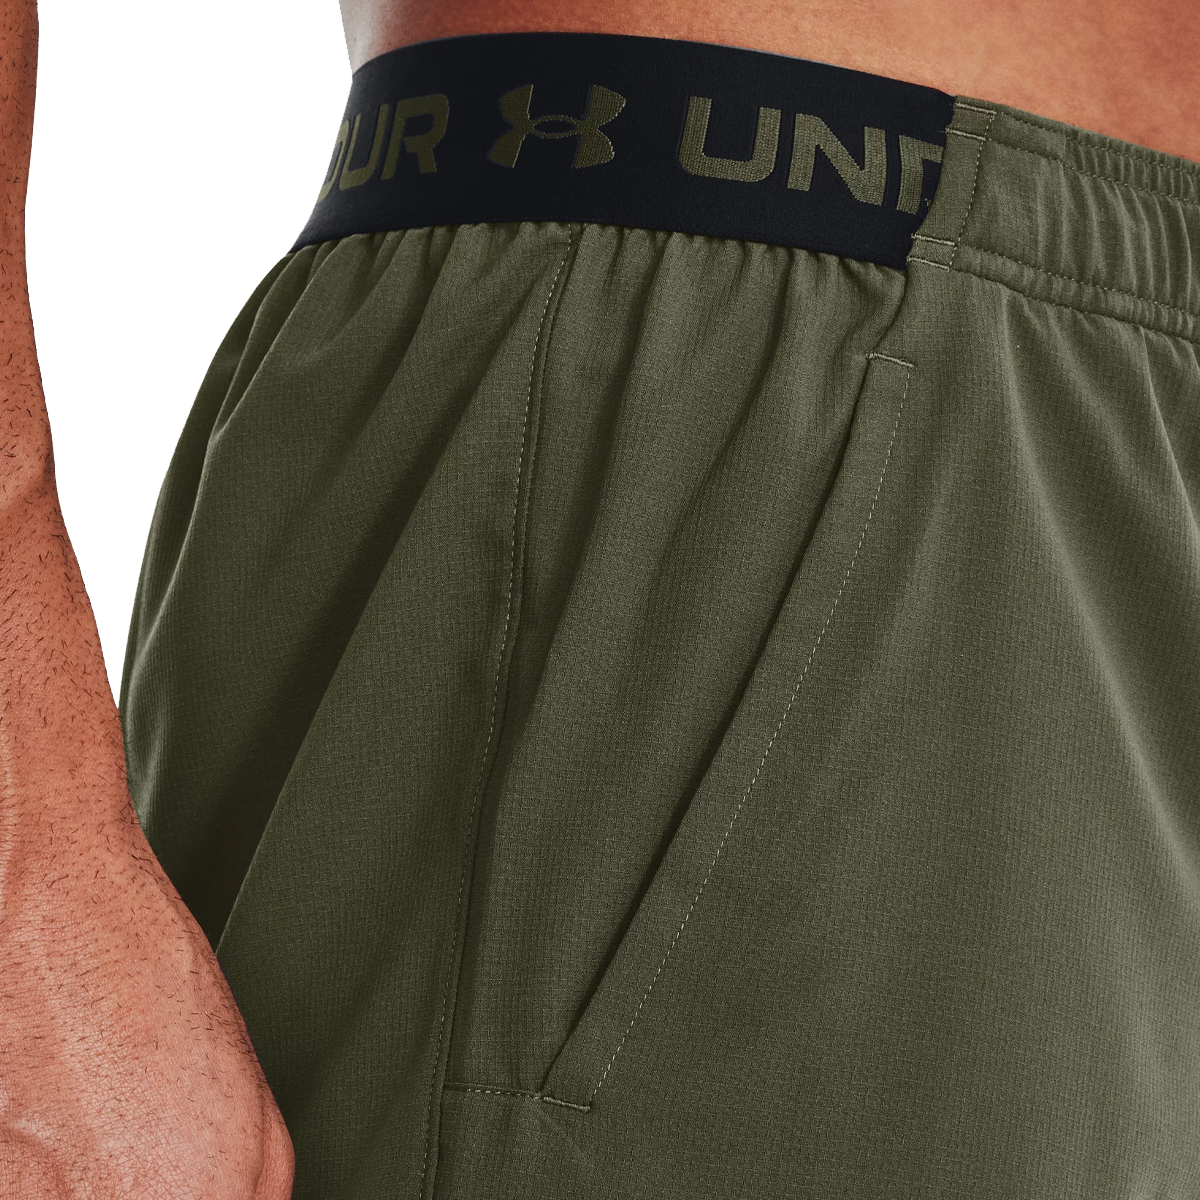 Under Armour UA Vanish Woven Shorts